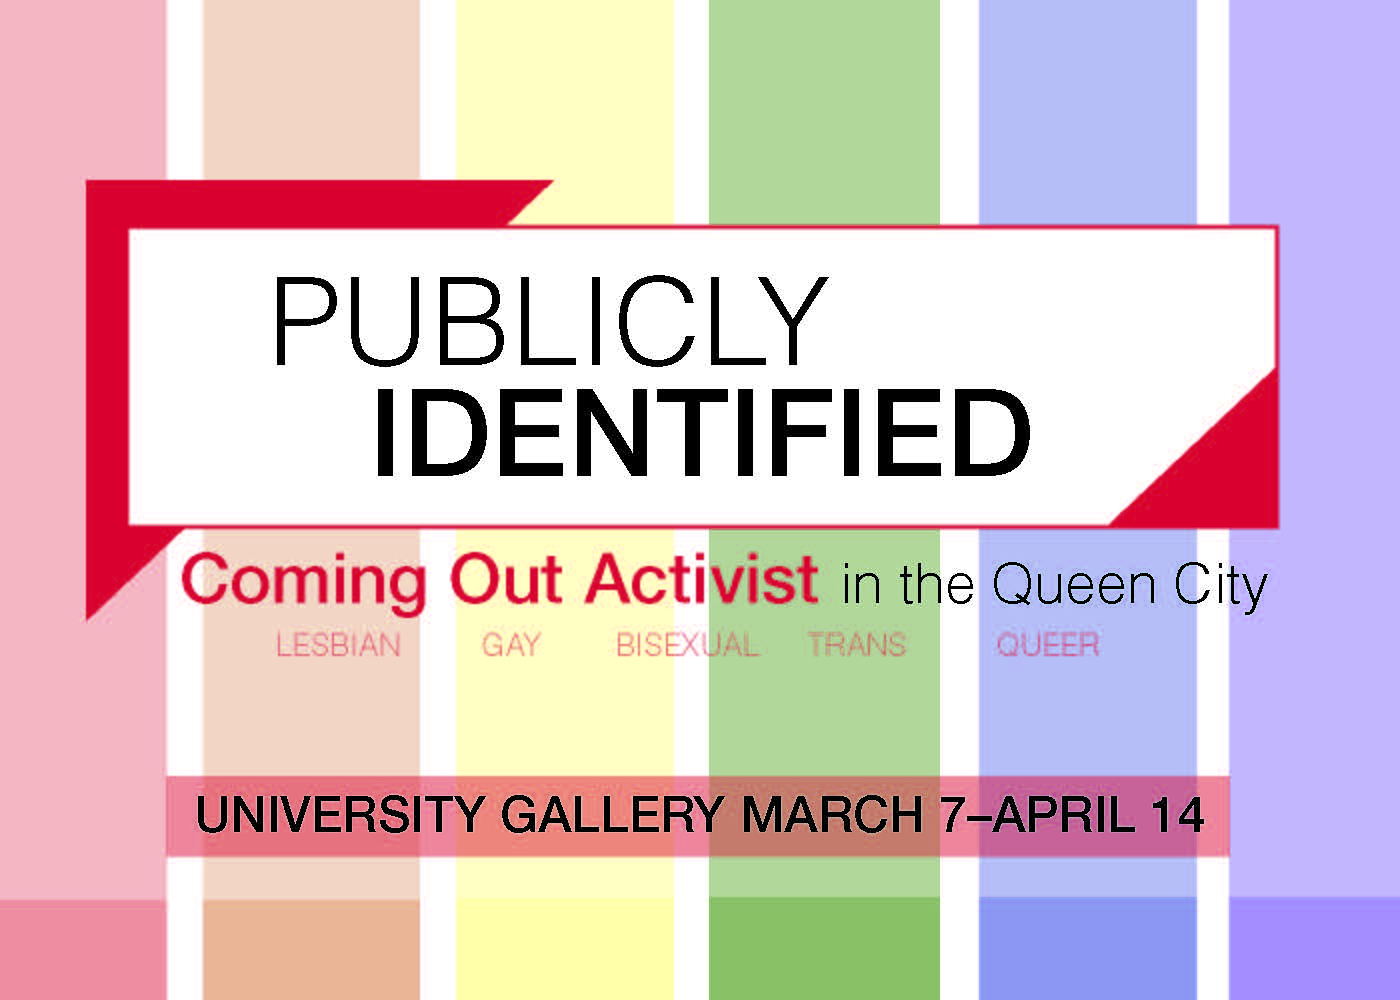 Alumnus brings "Publicly Identified" exhibit to UA.